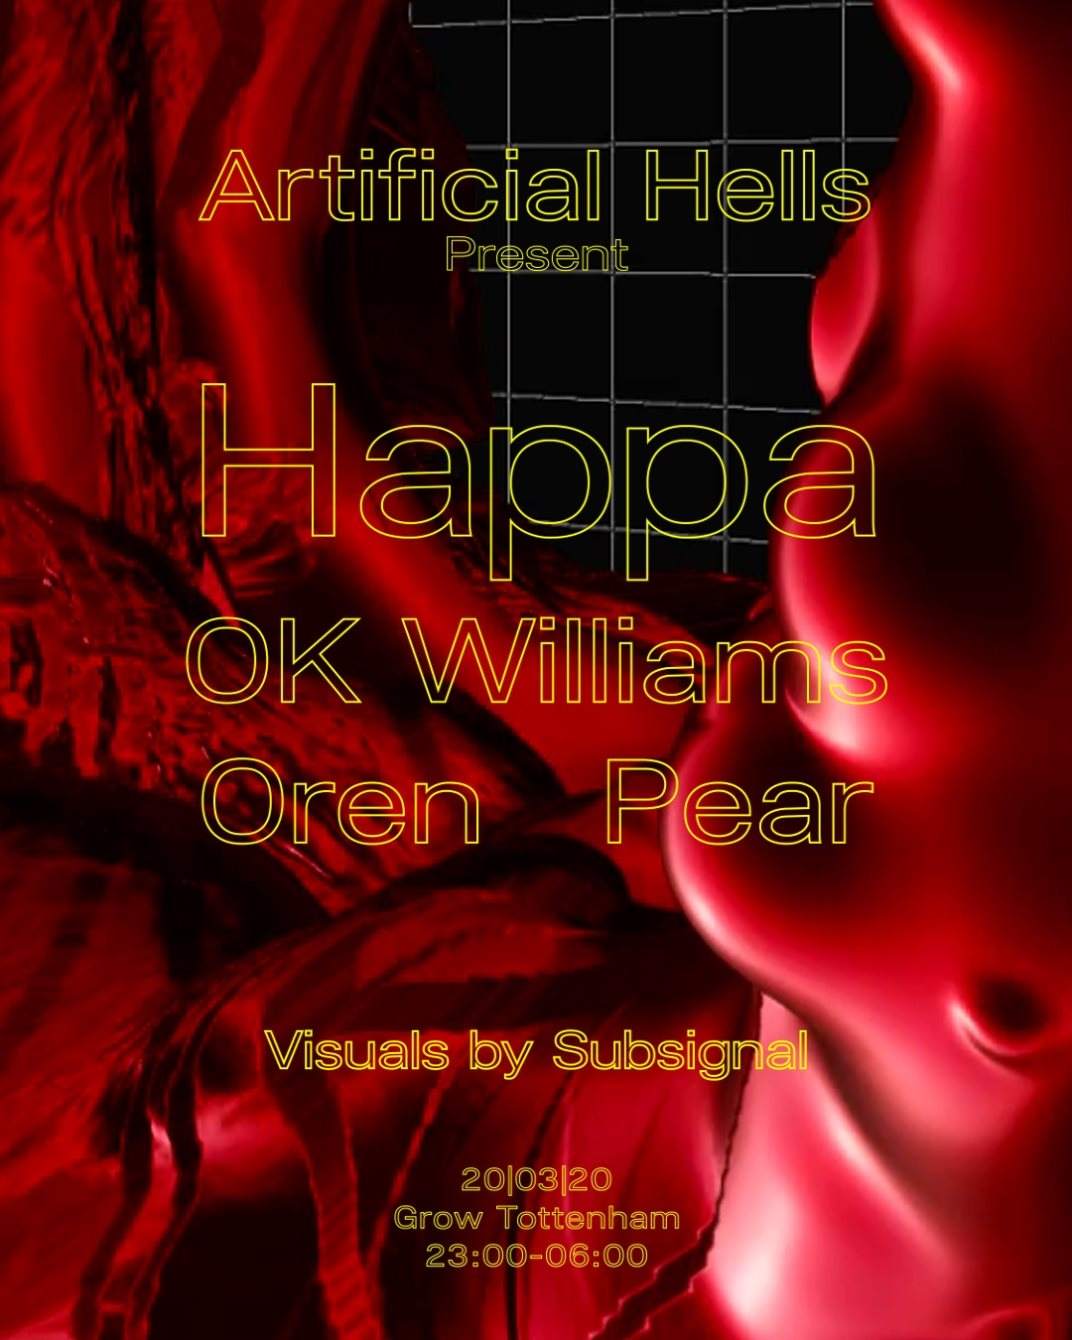 [POSTPONED] Artificial Hells presents: Happa, OK Williams, Oren & Pear. - Página trasera